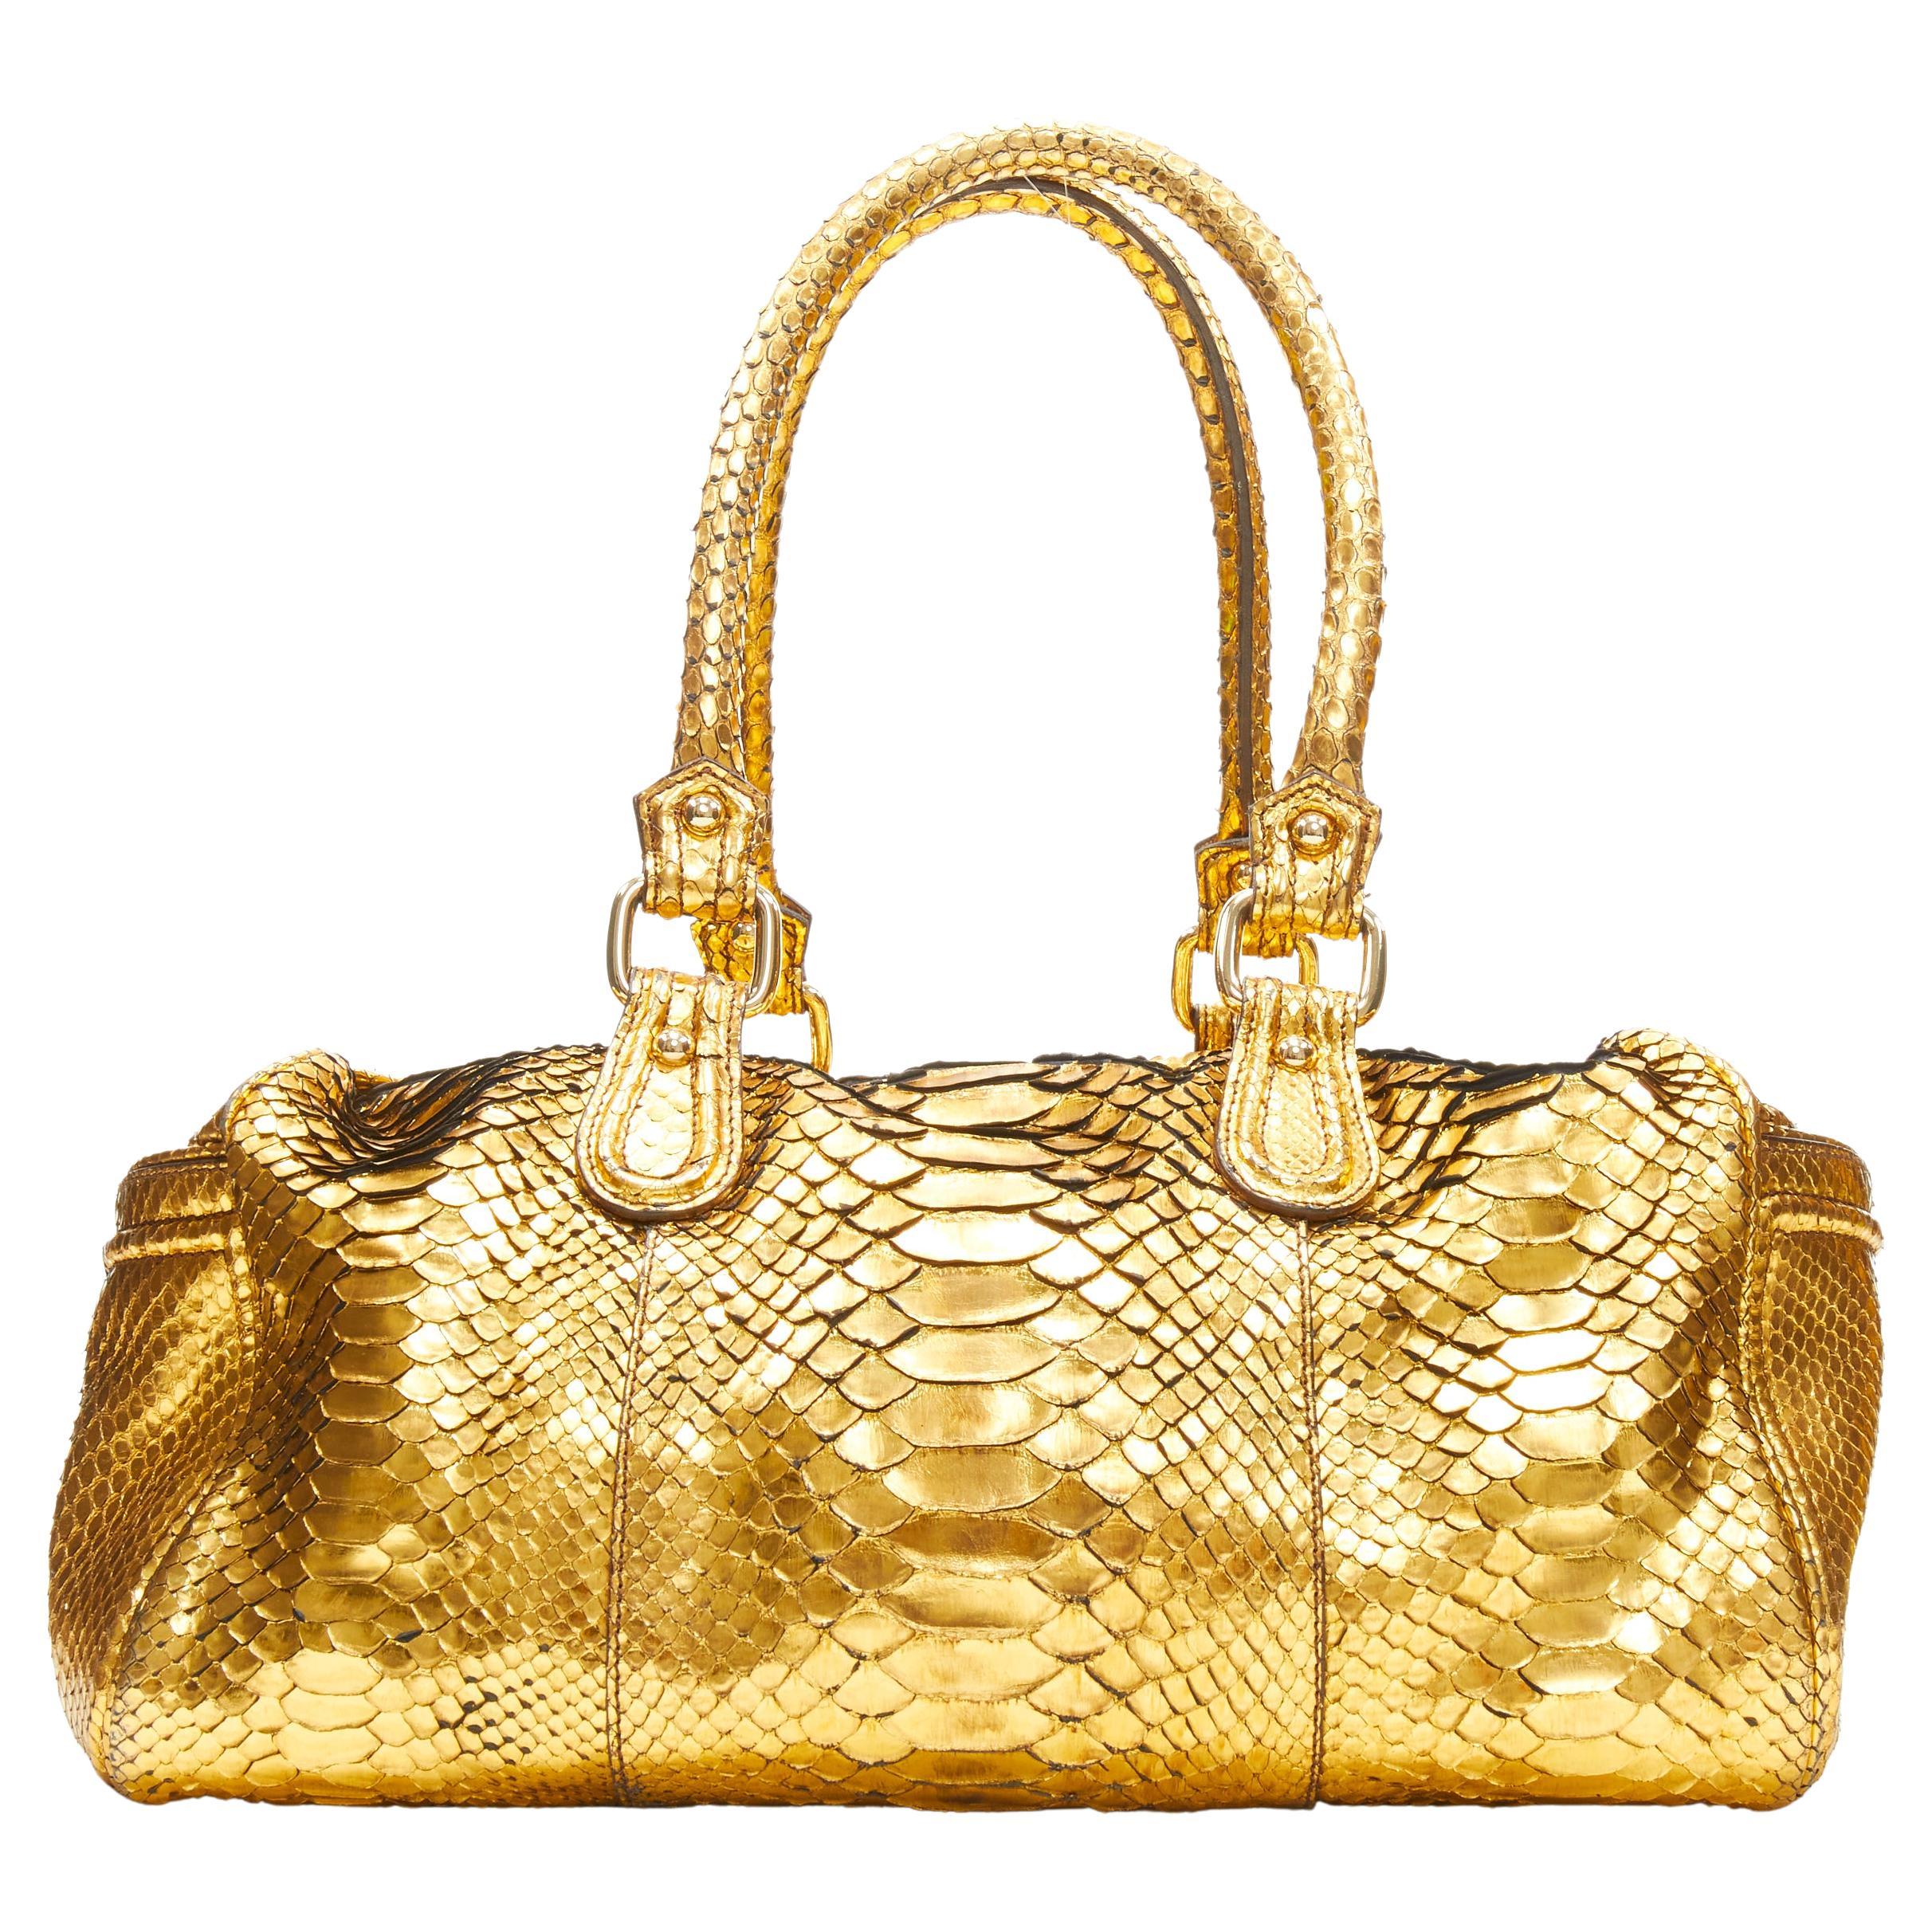 ZAGLIANI metallic gold scaled leather top handle duffel boston bag For Sale